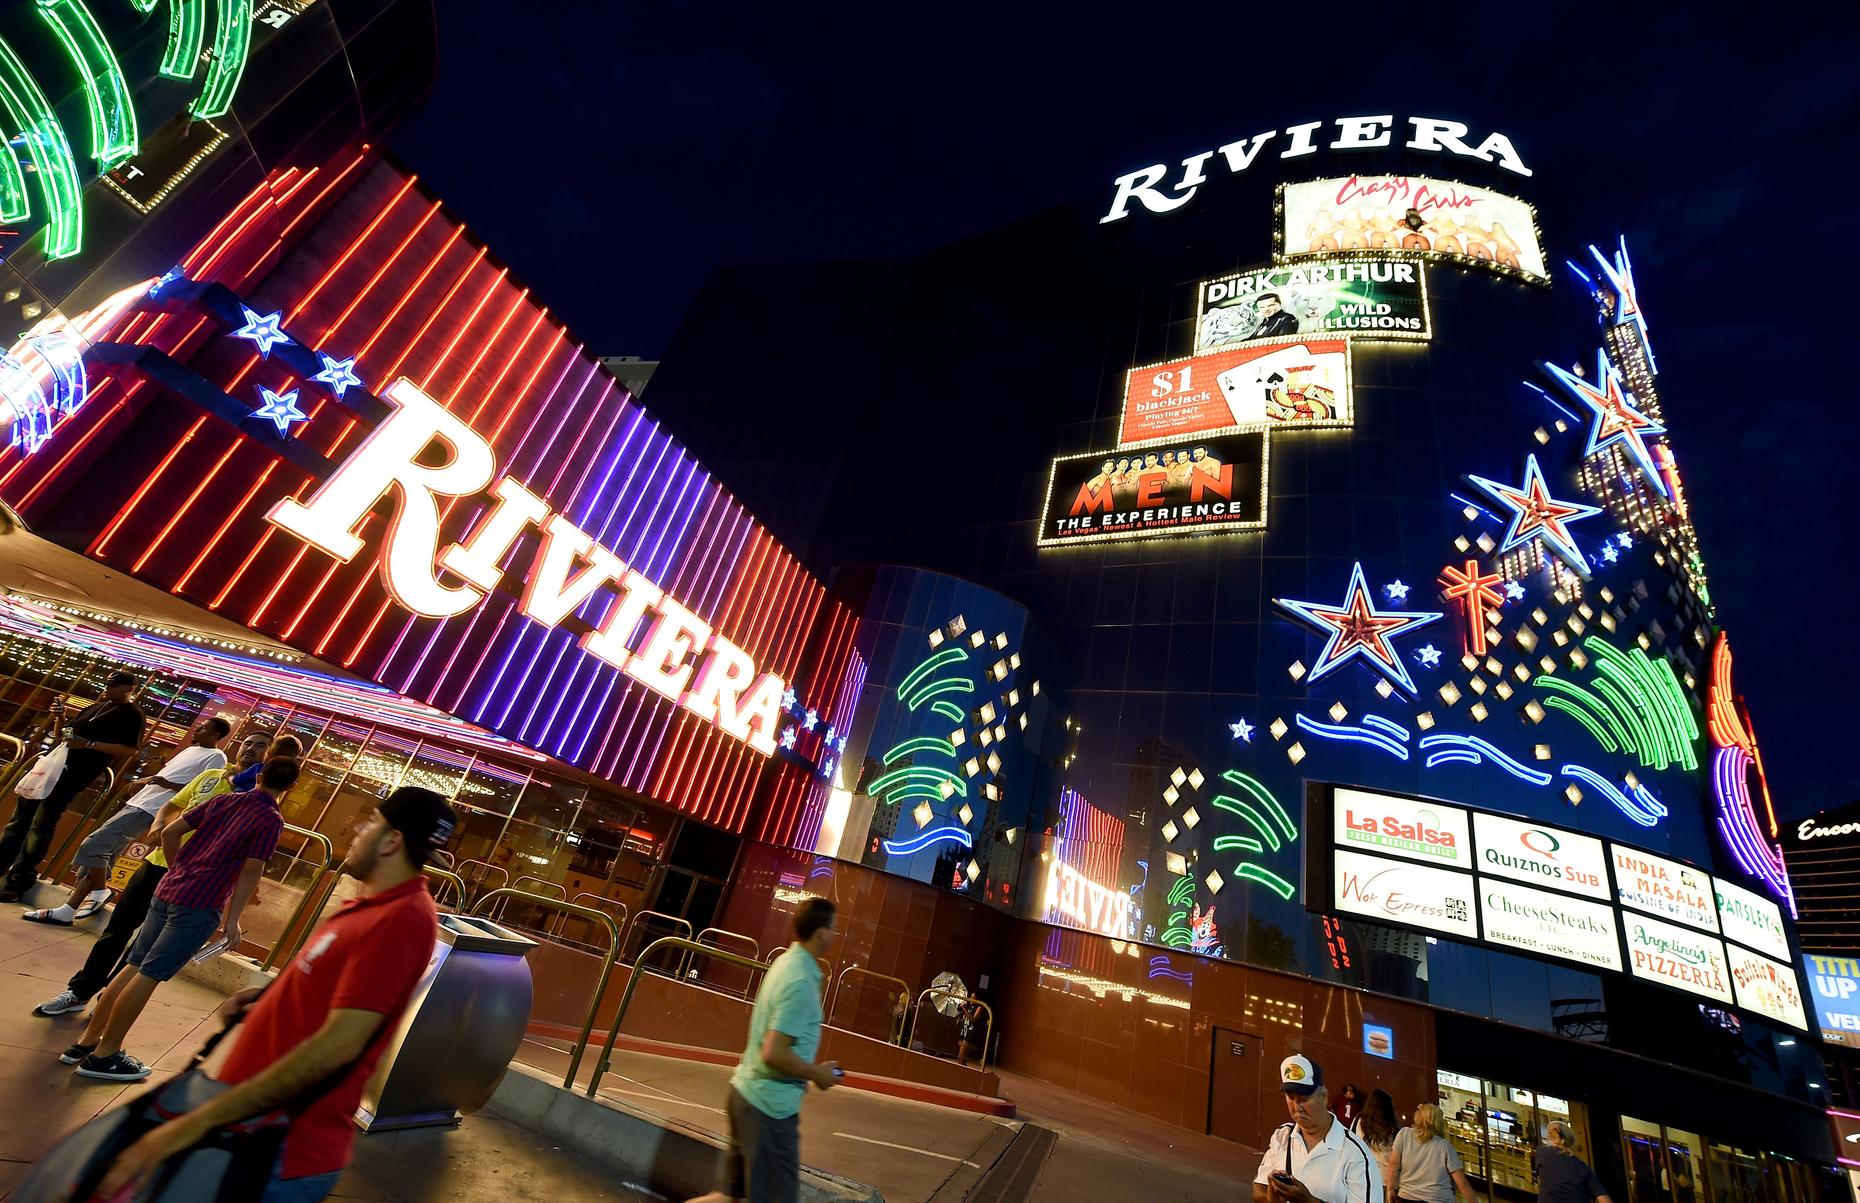 Riviera announces closure date, time on Las Vegas Strip